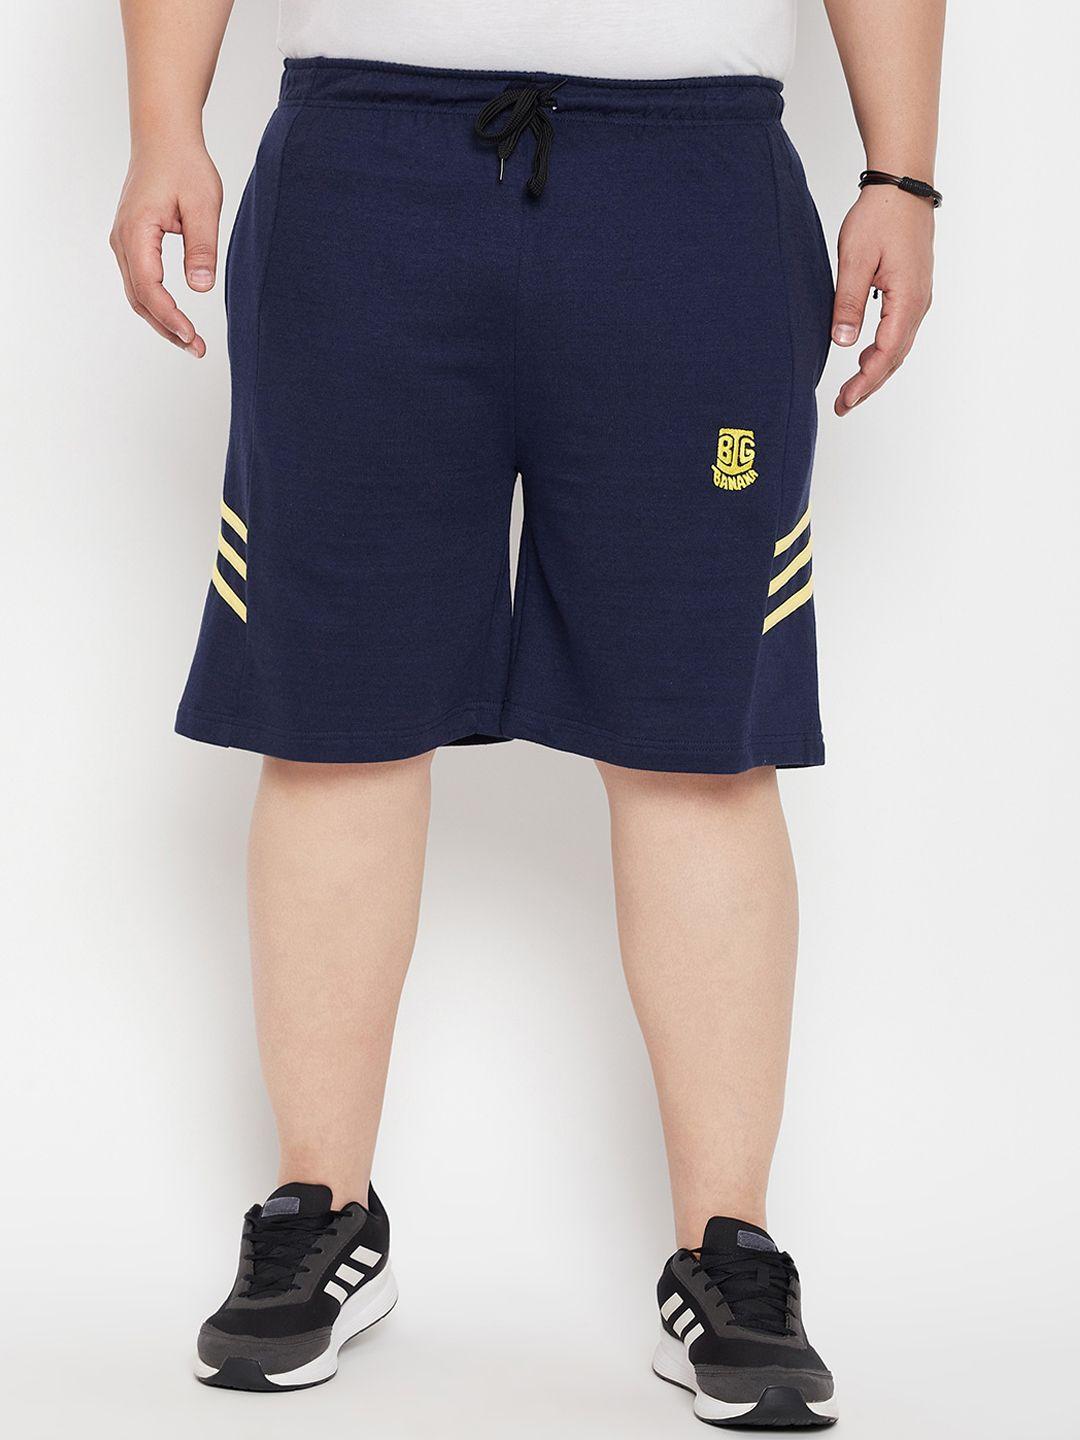 bigbanana-men-plus-size-striped-mid-rise-cotton-shorts